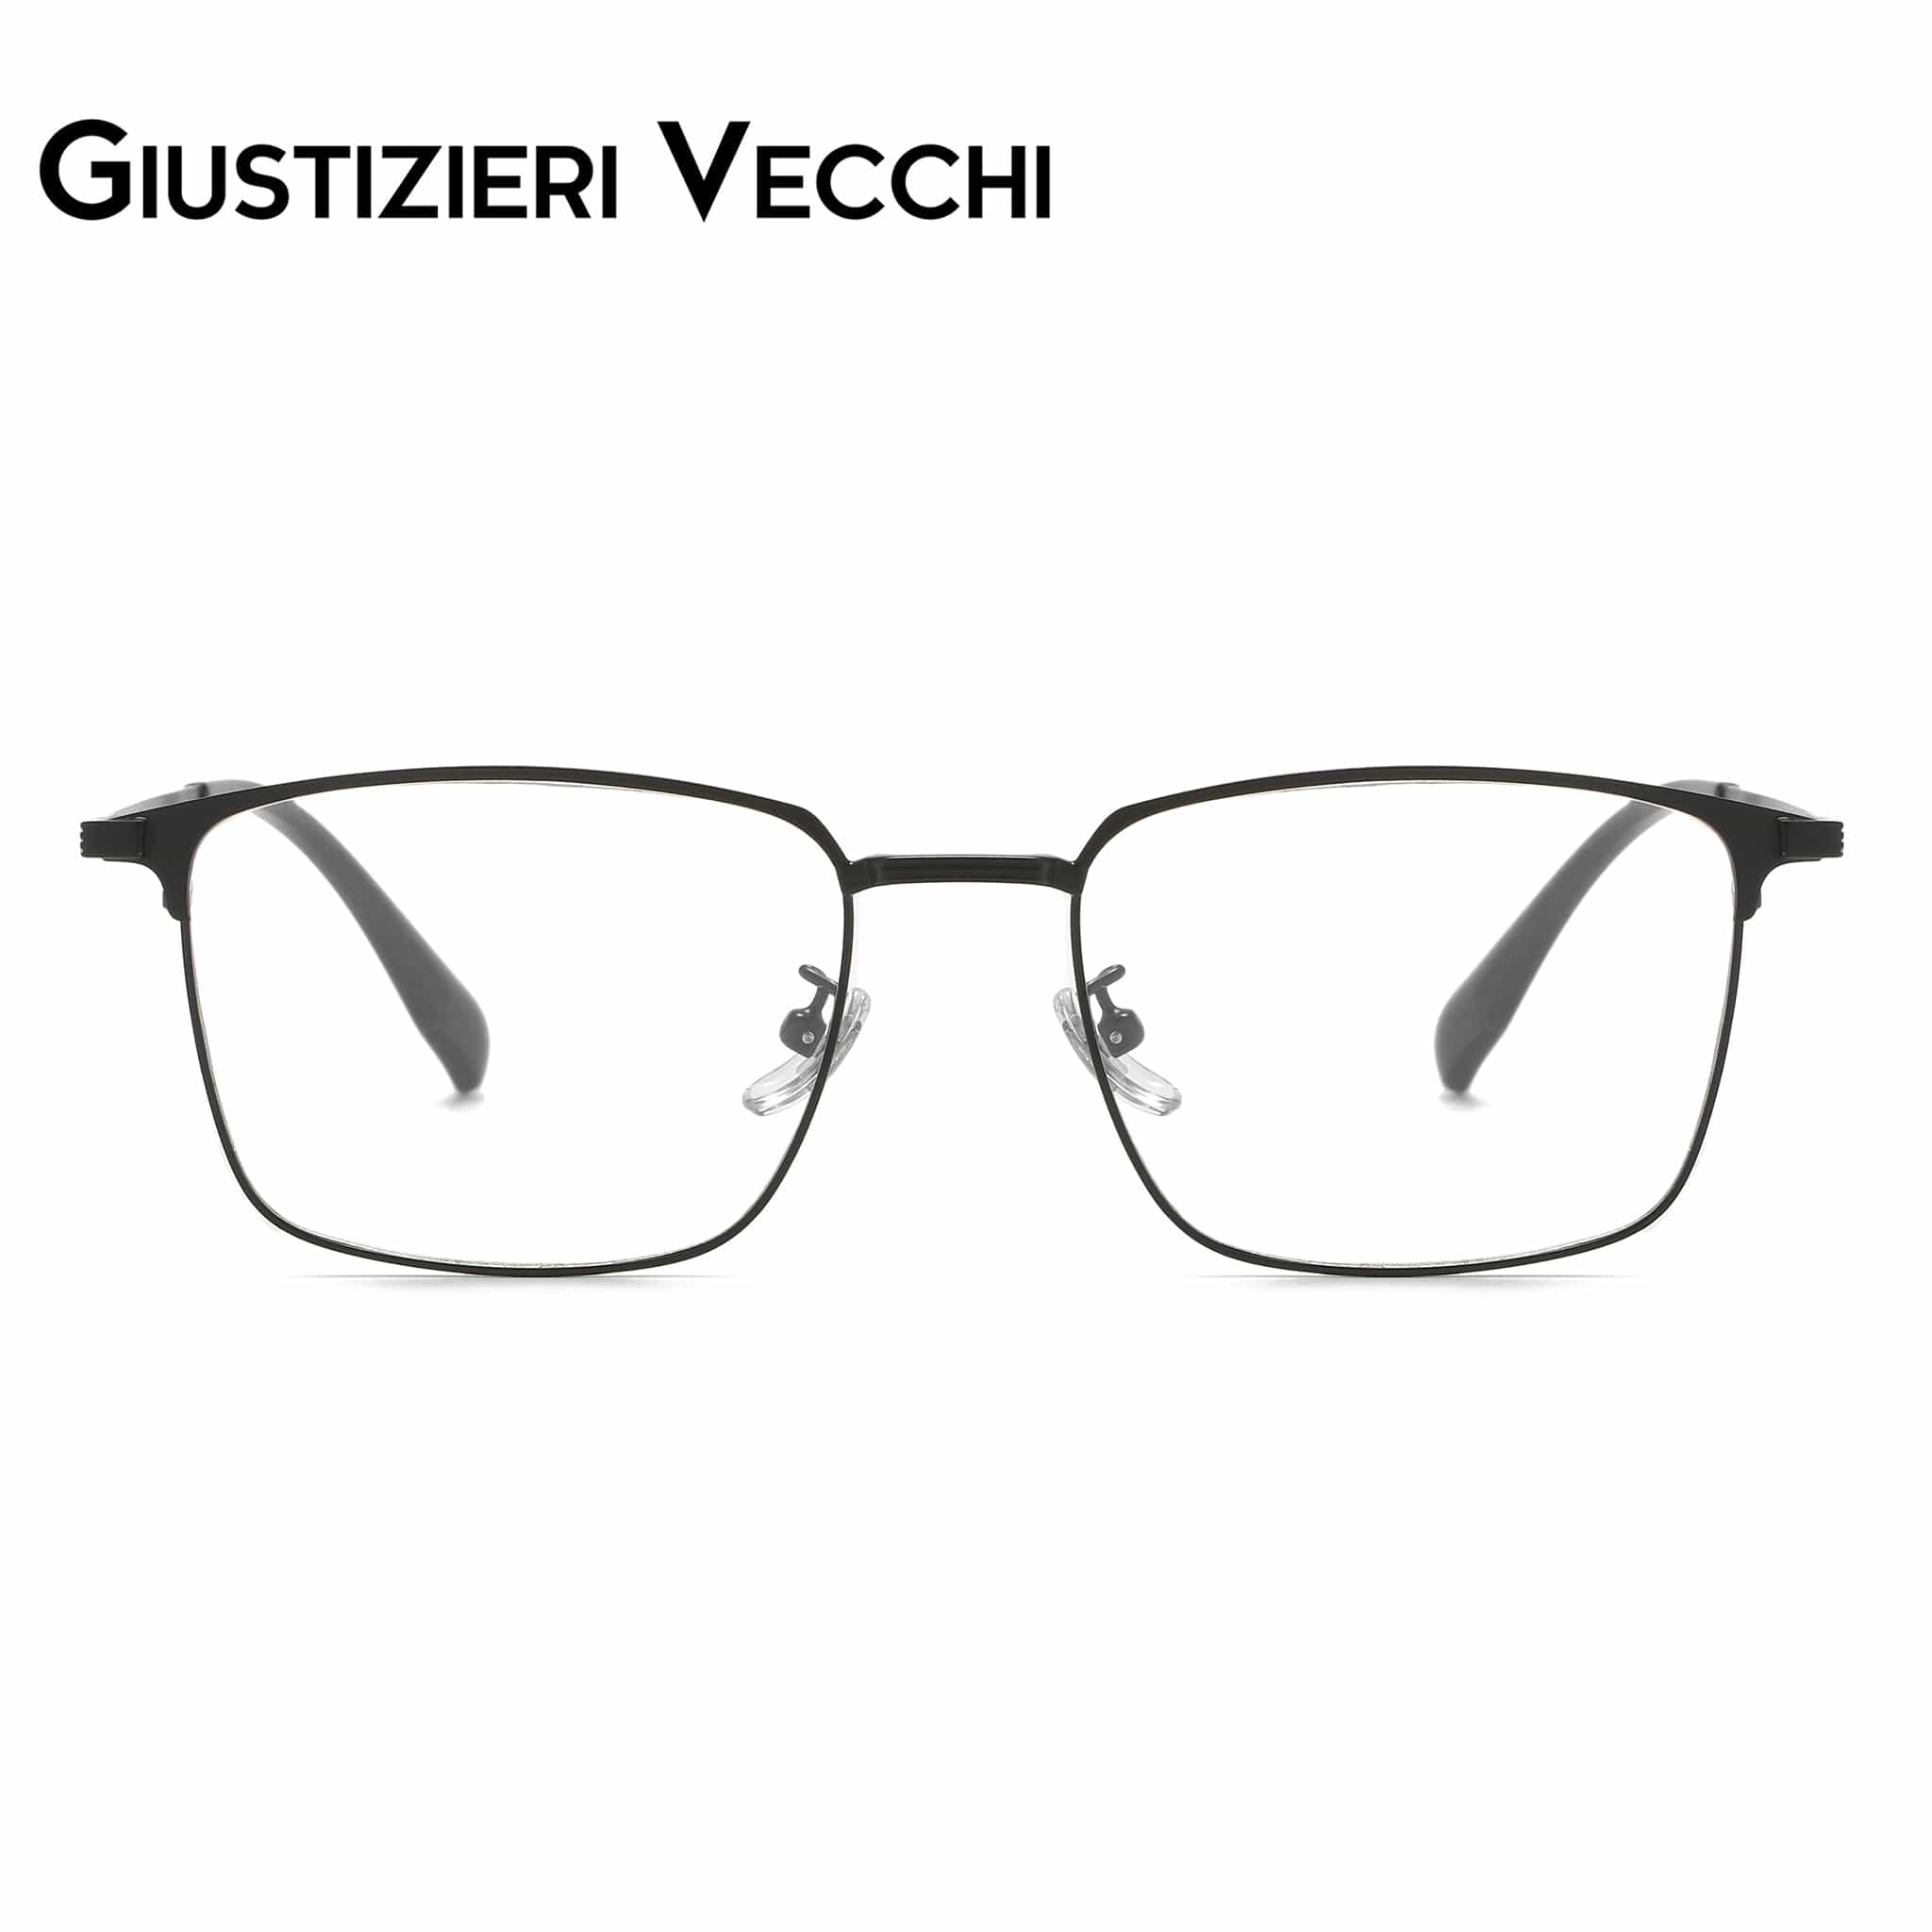 GIUSTIZIERI VECCHI Eyeglasses Medium / Black NovaBurst Uno